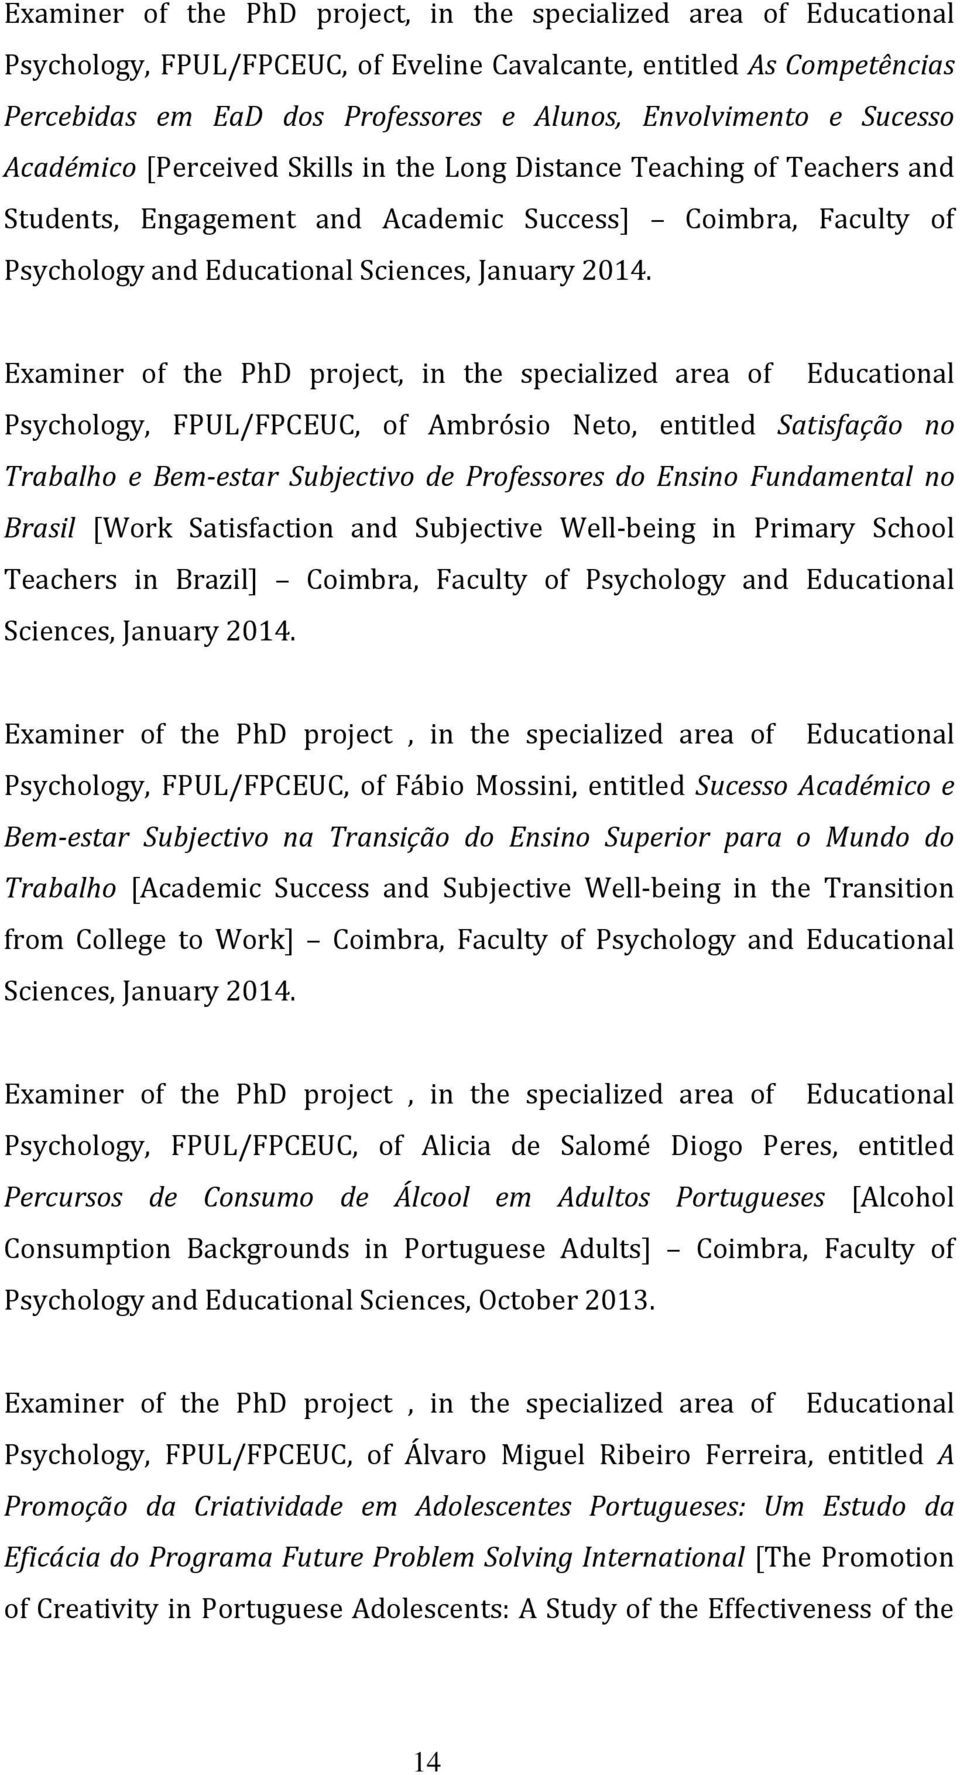 Examiner of the PhD project, in the specialized area of Educational Psychology, FPUL/FPCEUC, of Ambrósio Neto, entitled Satisfação no Trabalho e Bem-estar Subjectivo de Professores do Ensino